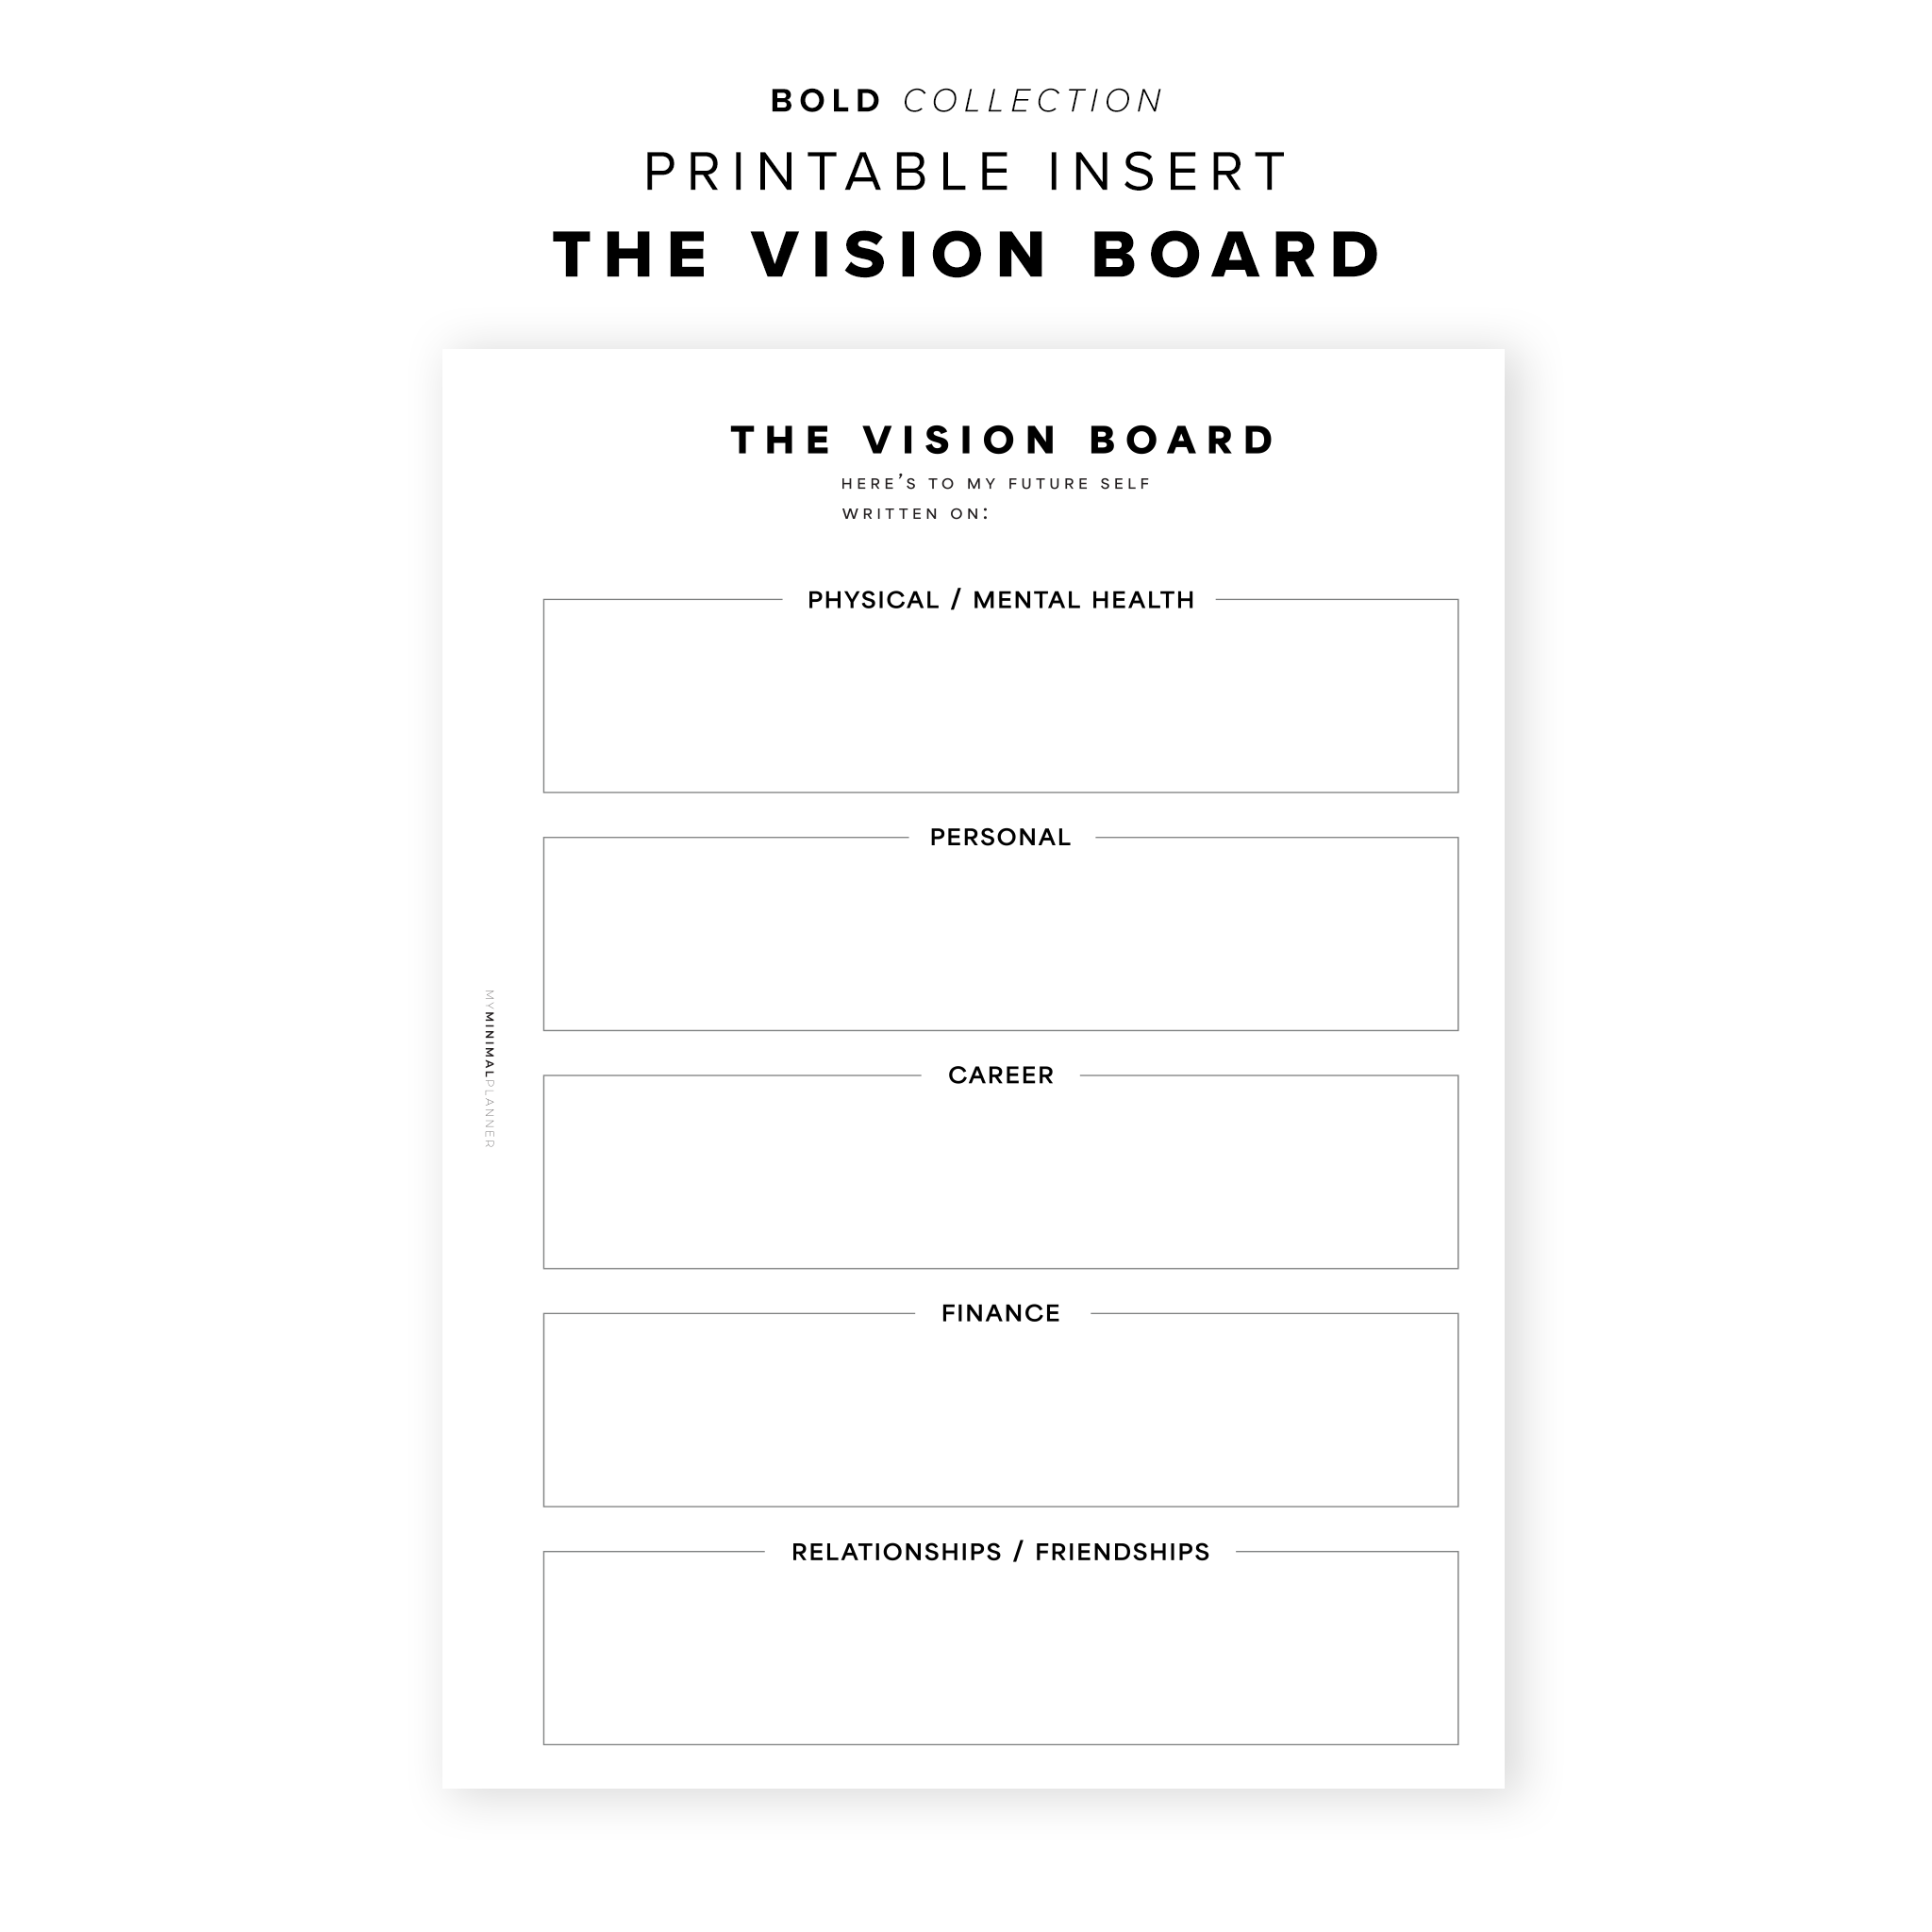 PR235 - The Vision Board - Printable Insert